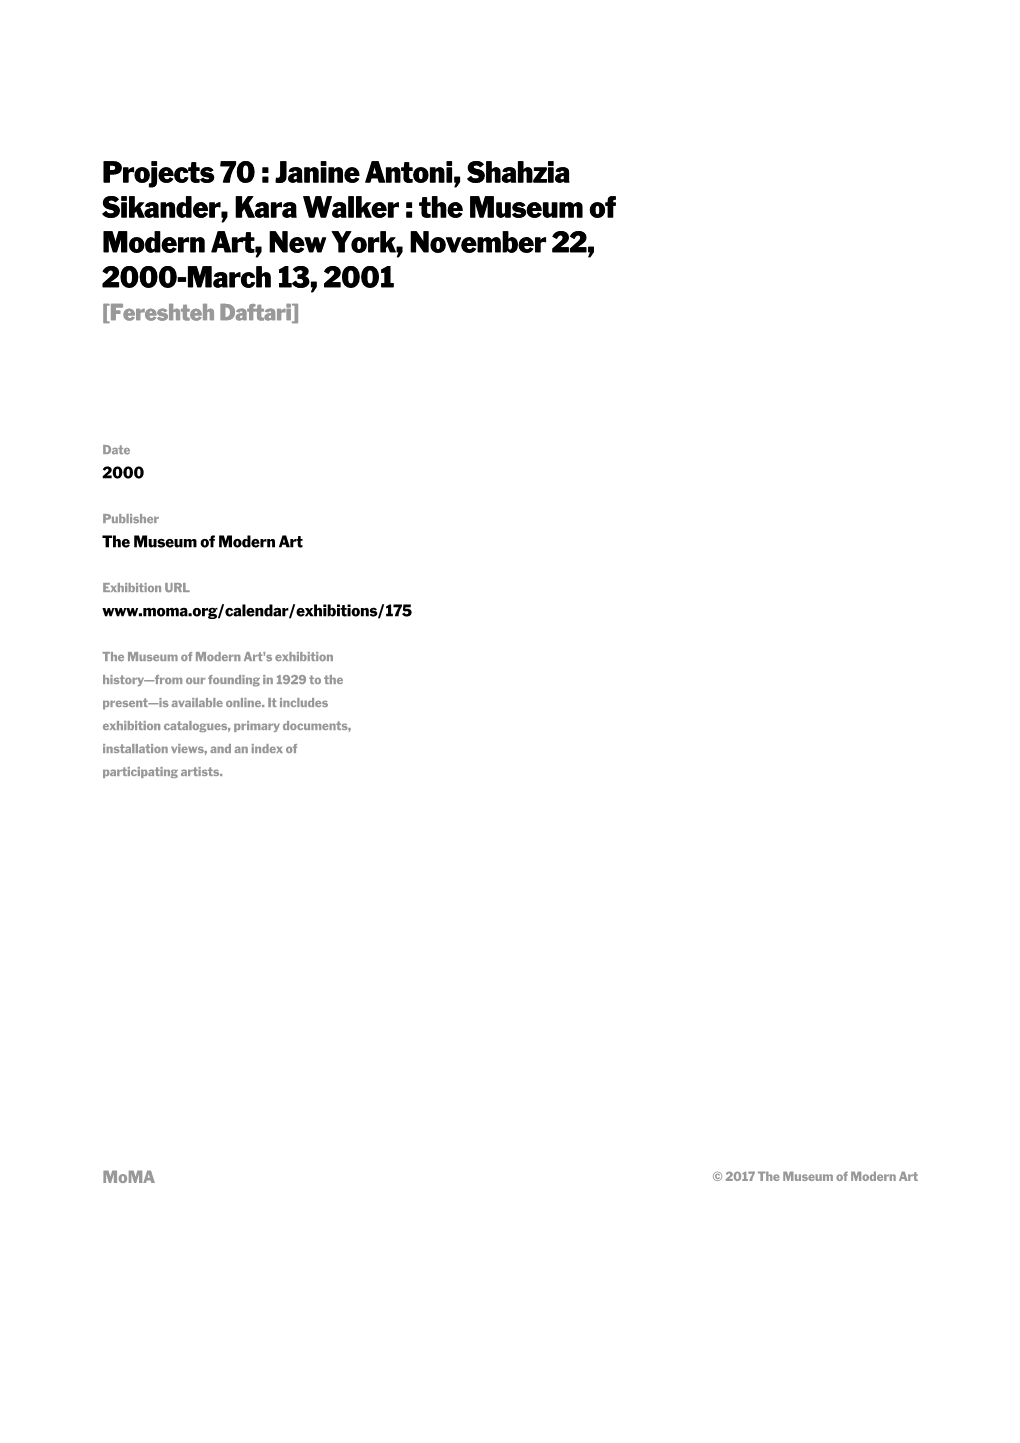 Projects 70 : Janine Antoni, Shahzia Sikander, Kara Walker : the Museum of Modern Art, New York, November 22, 2000-March 13, 2001 [Fereshteh Daftari]